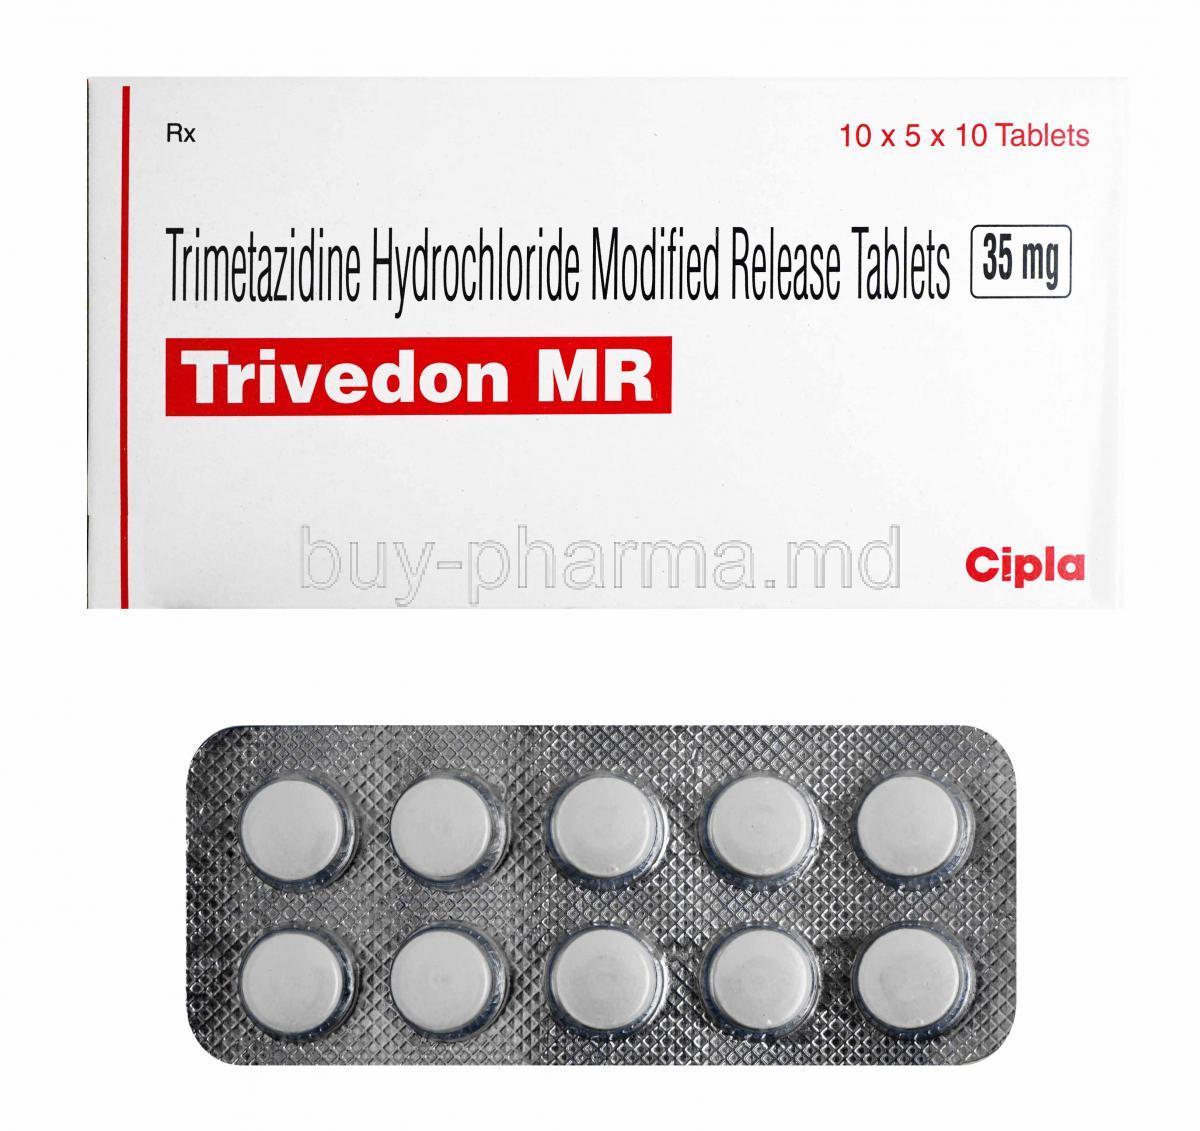 Trivedon MR, Trimetazidine 35mg box and tablets